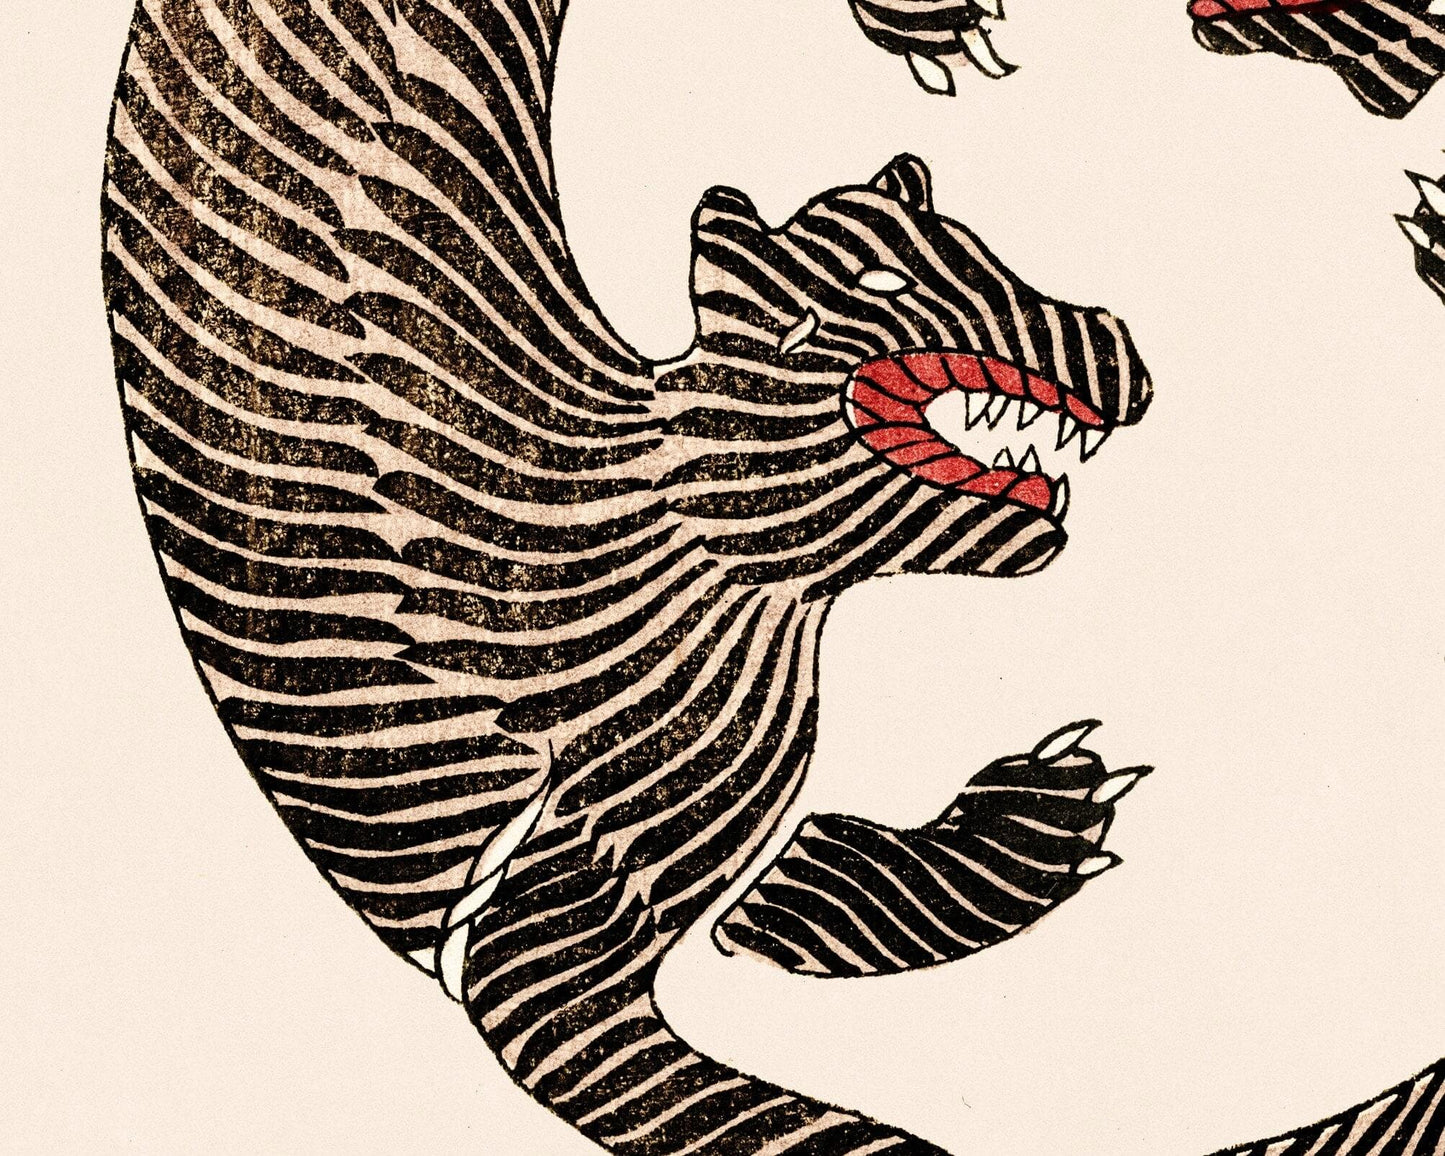 A Circle of Tigers Art Print